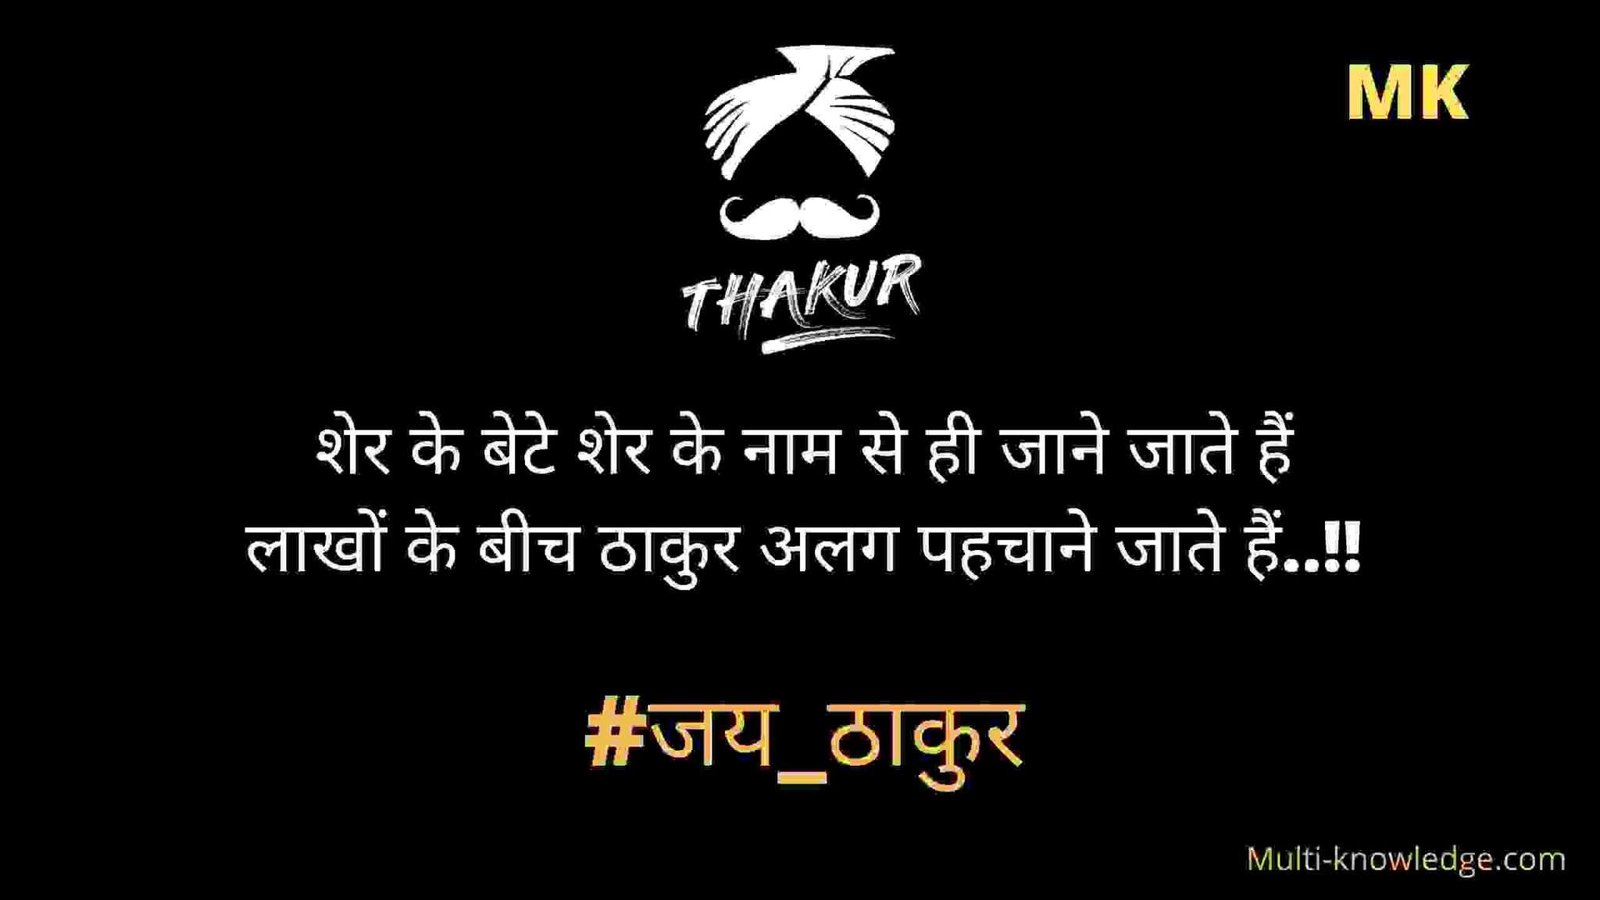 Best whatapp Thakur Attitude Status in Hindi by multi-knowledge.com